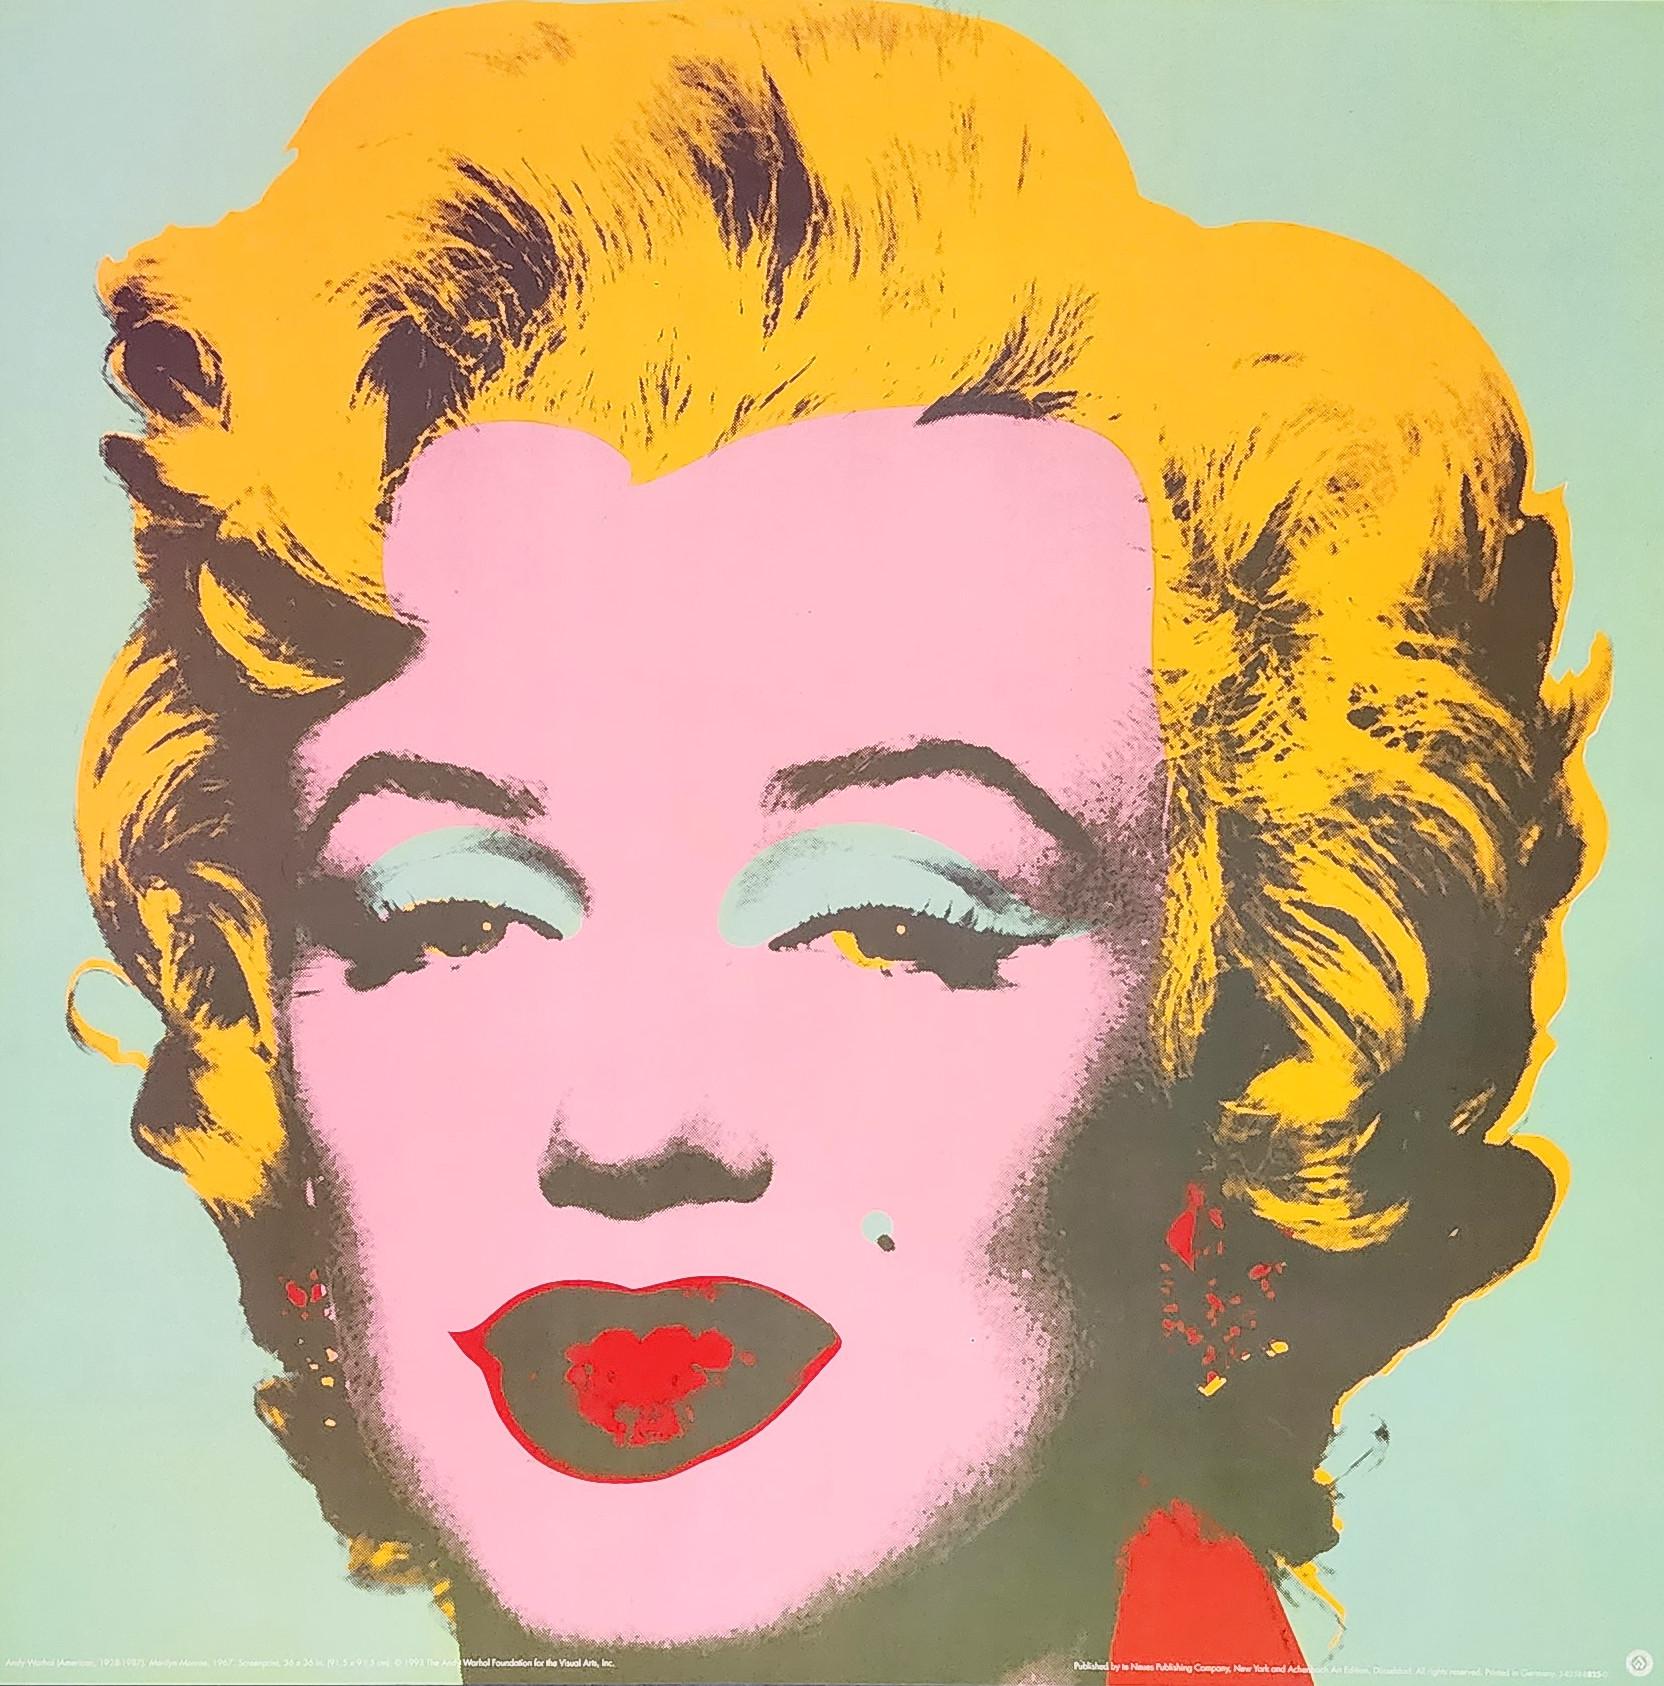 Andy Warhol Portrait Print - Marilyn, 1967 (Green) (Pop Art, Visual Art Movement, Celebrity Culture)